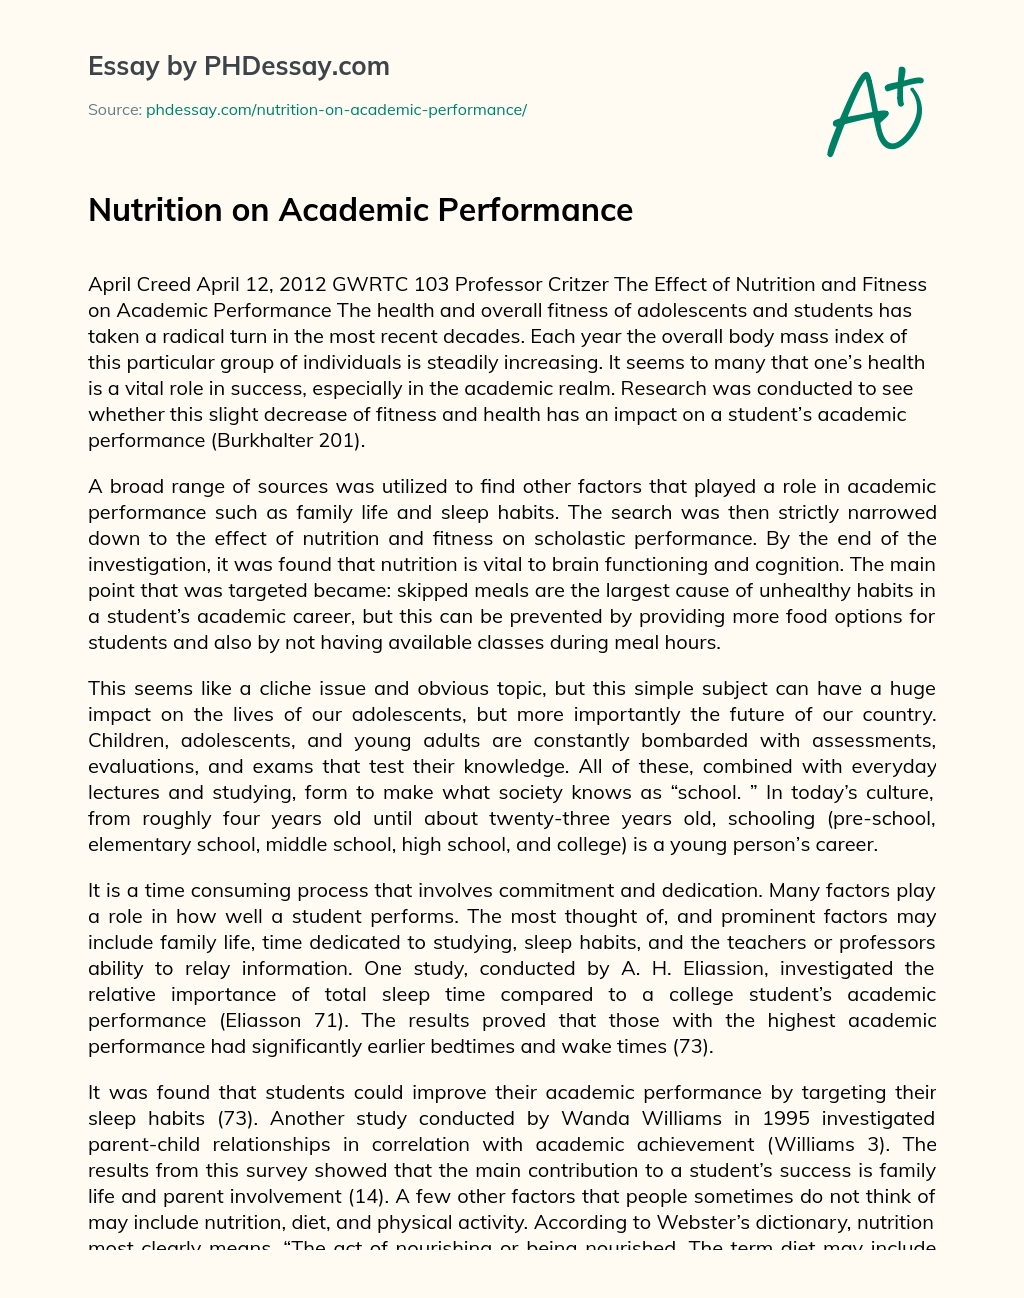 Nutrition on Academic Performance essay